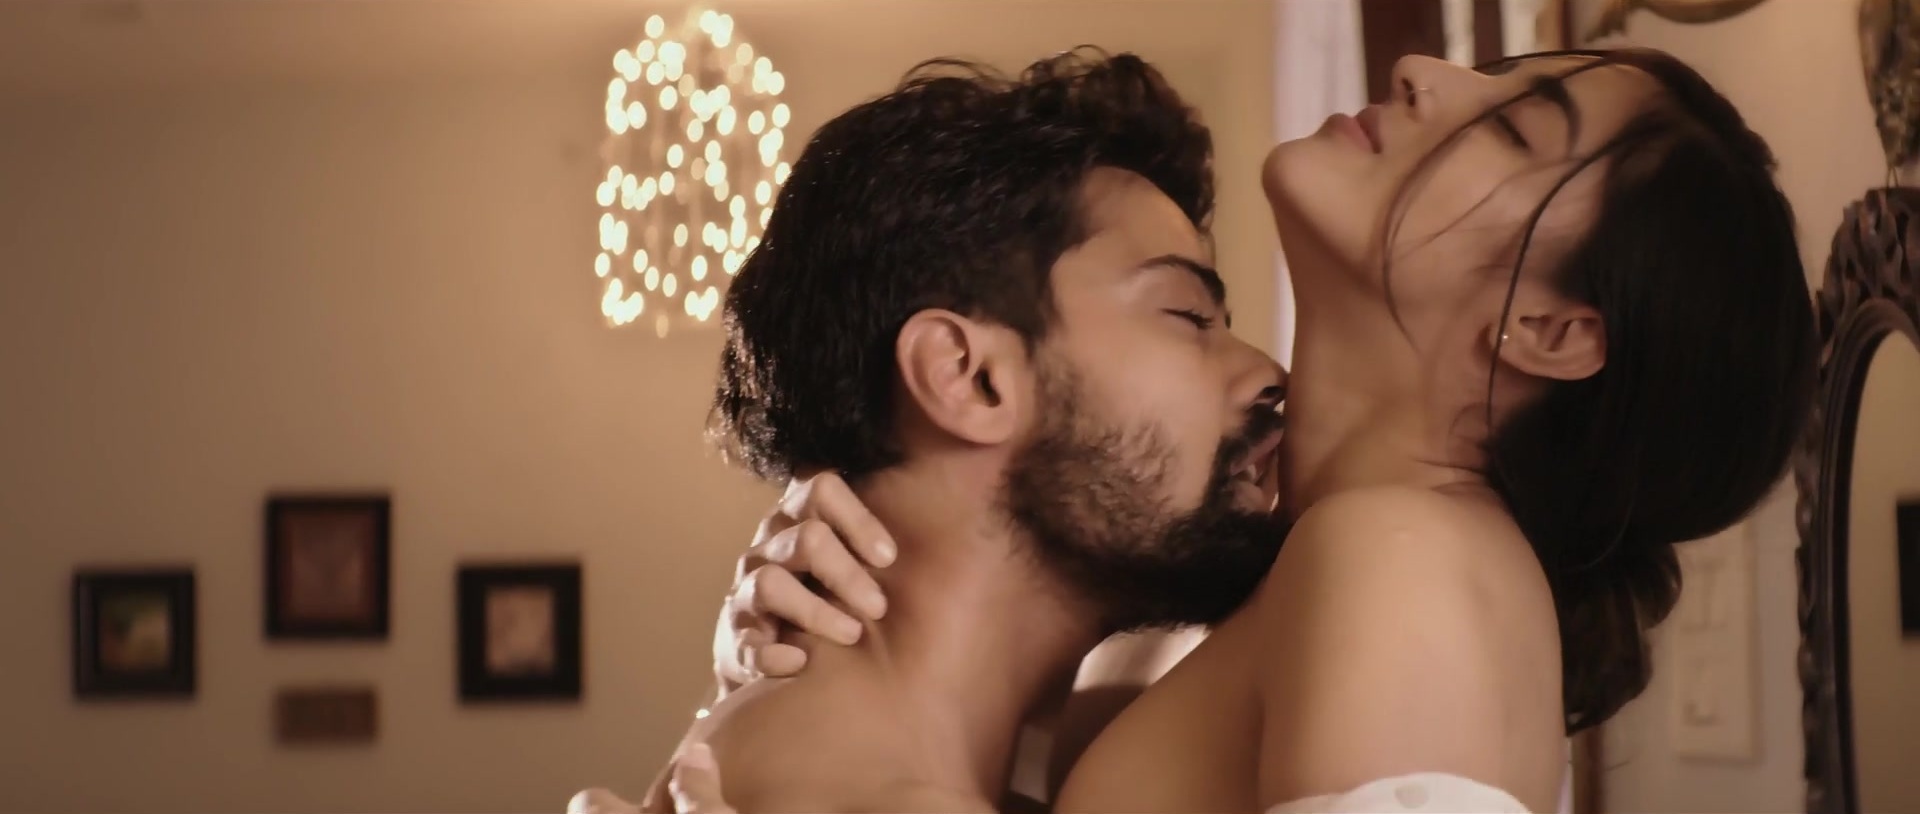 Nude video celebs » Simrat Kaur sexy